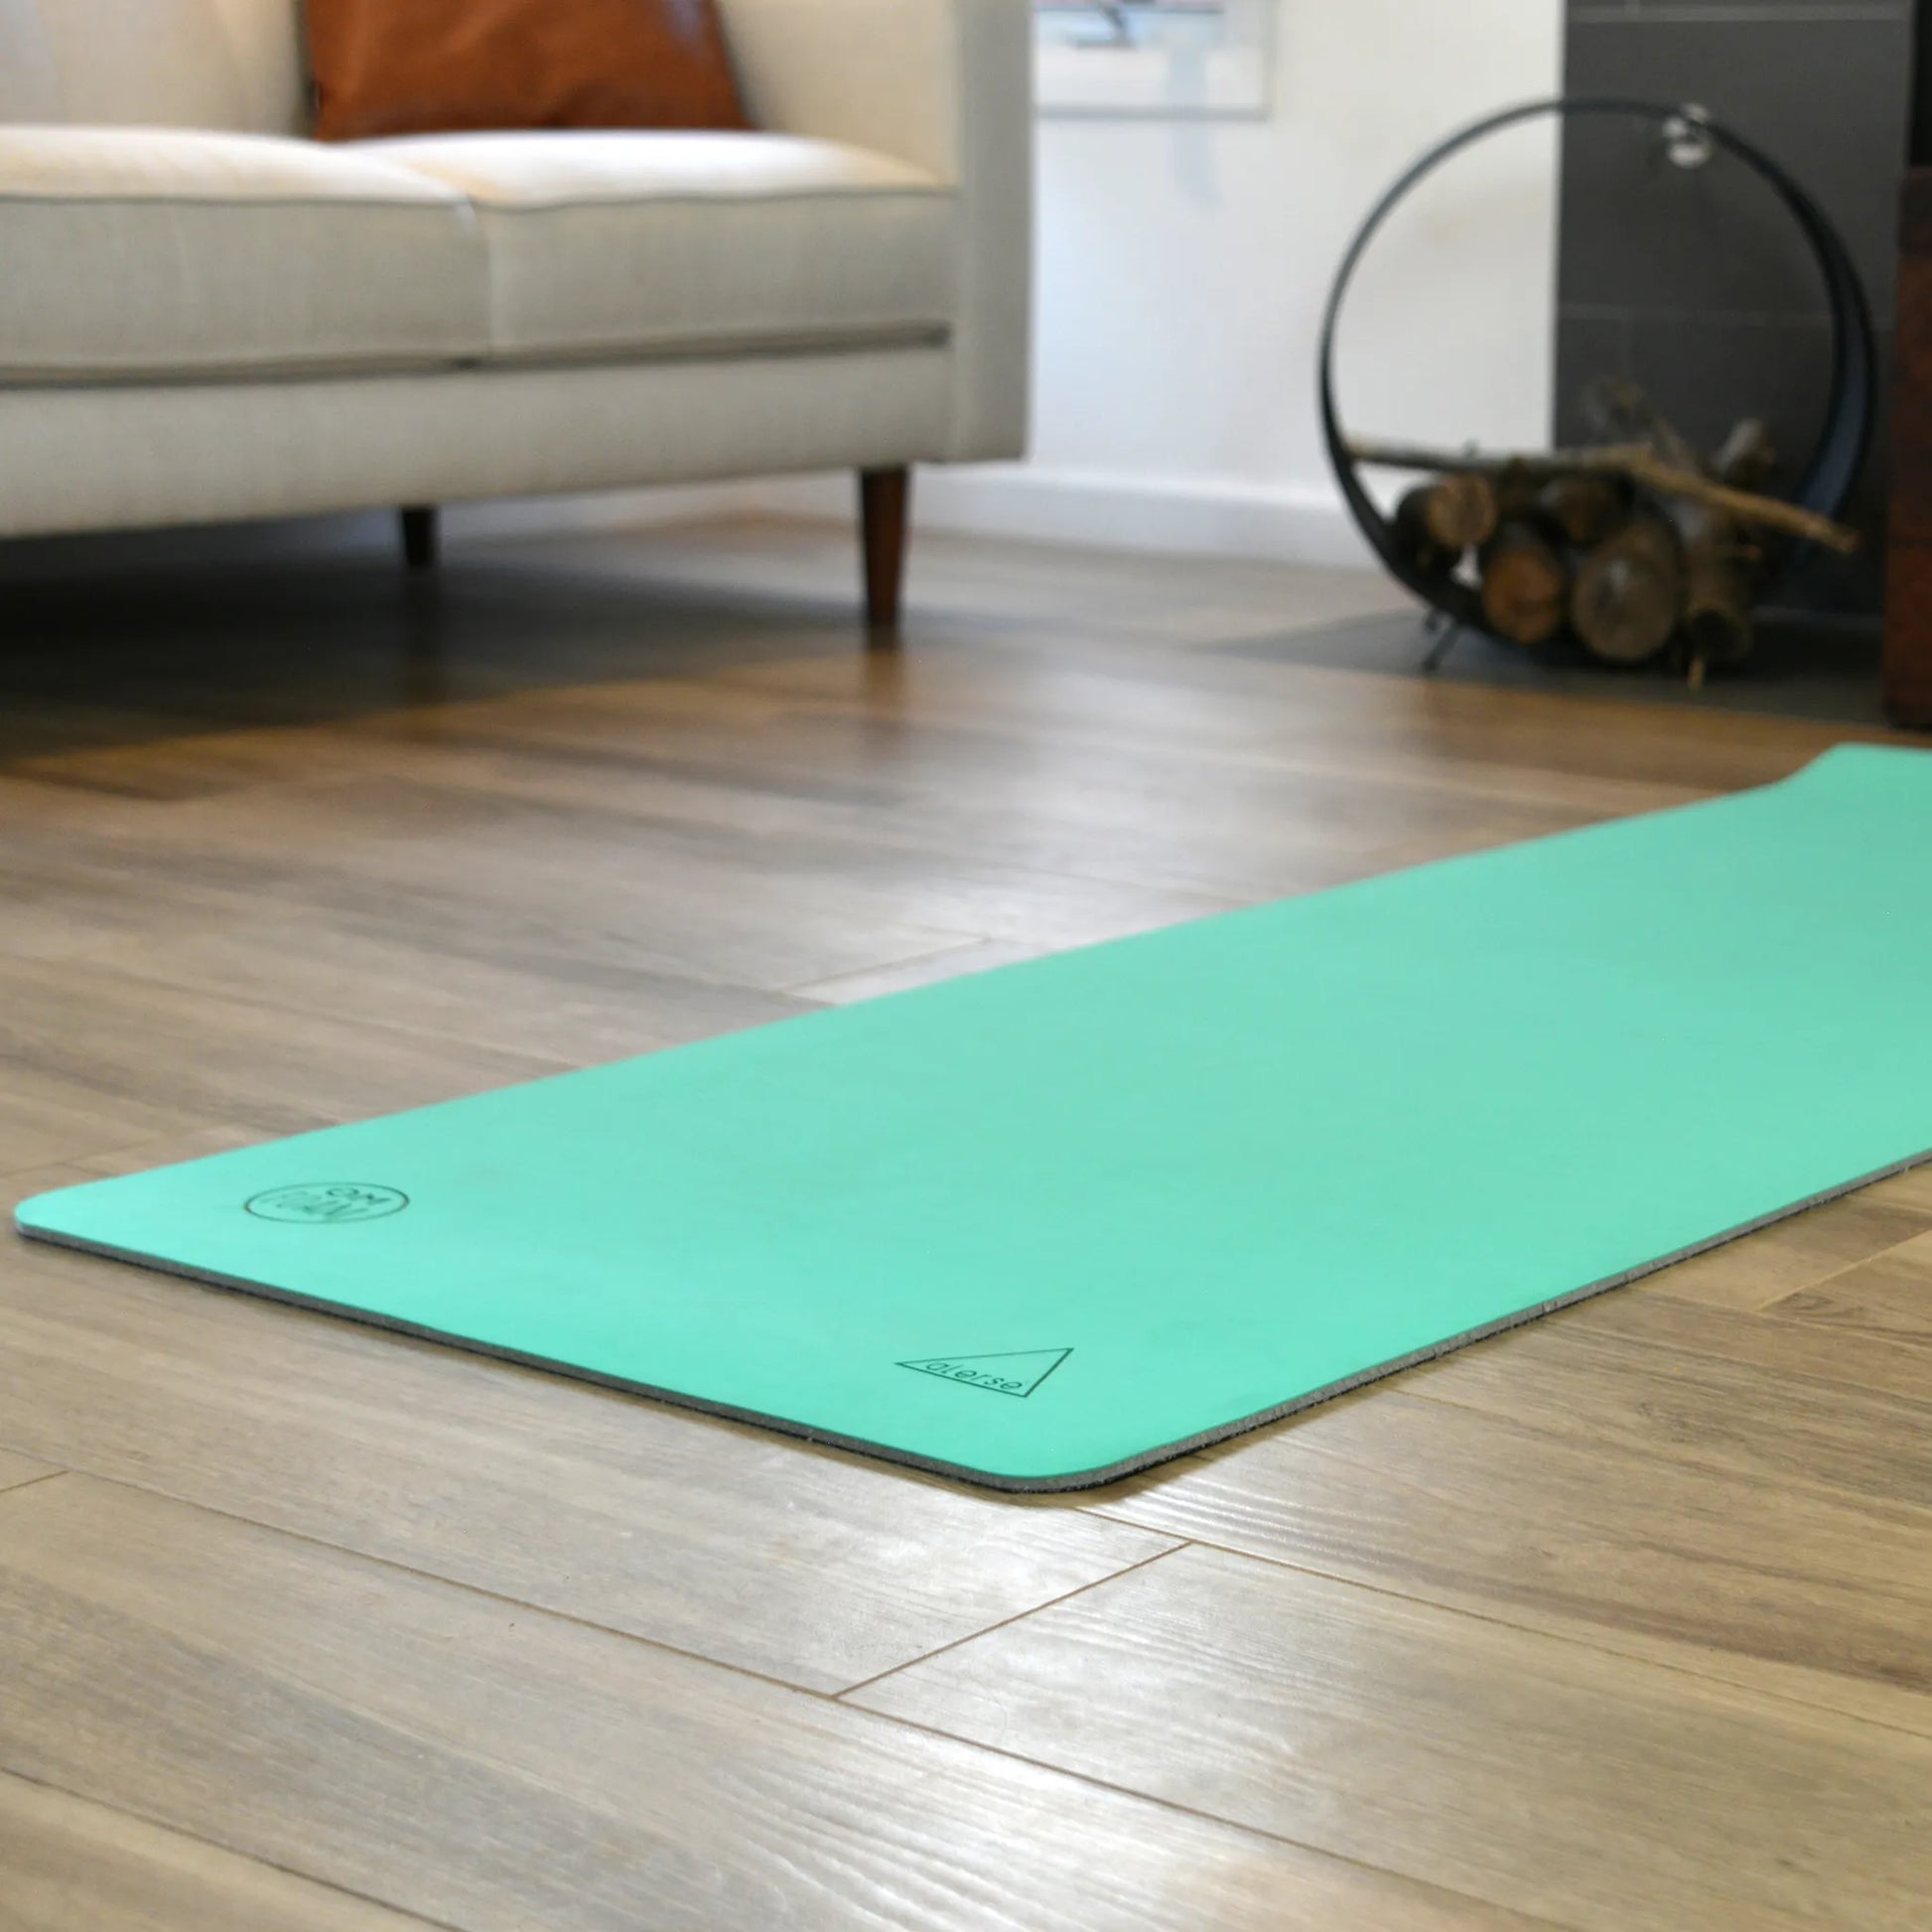 Teal yoga mat lying flat on the floor.